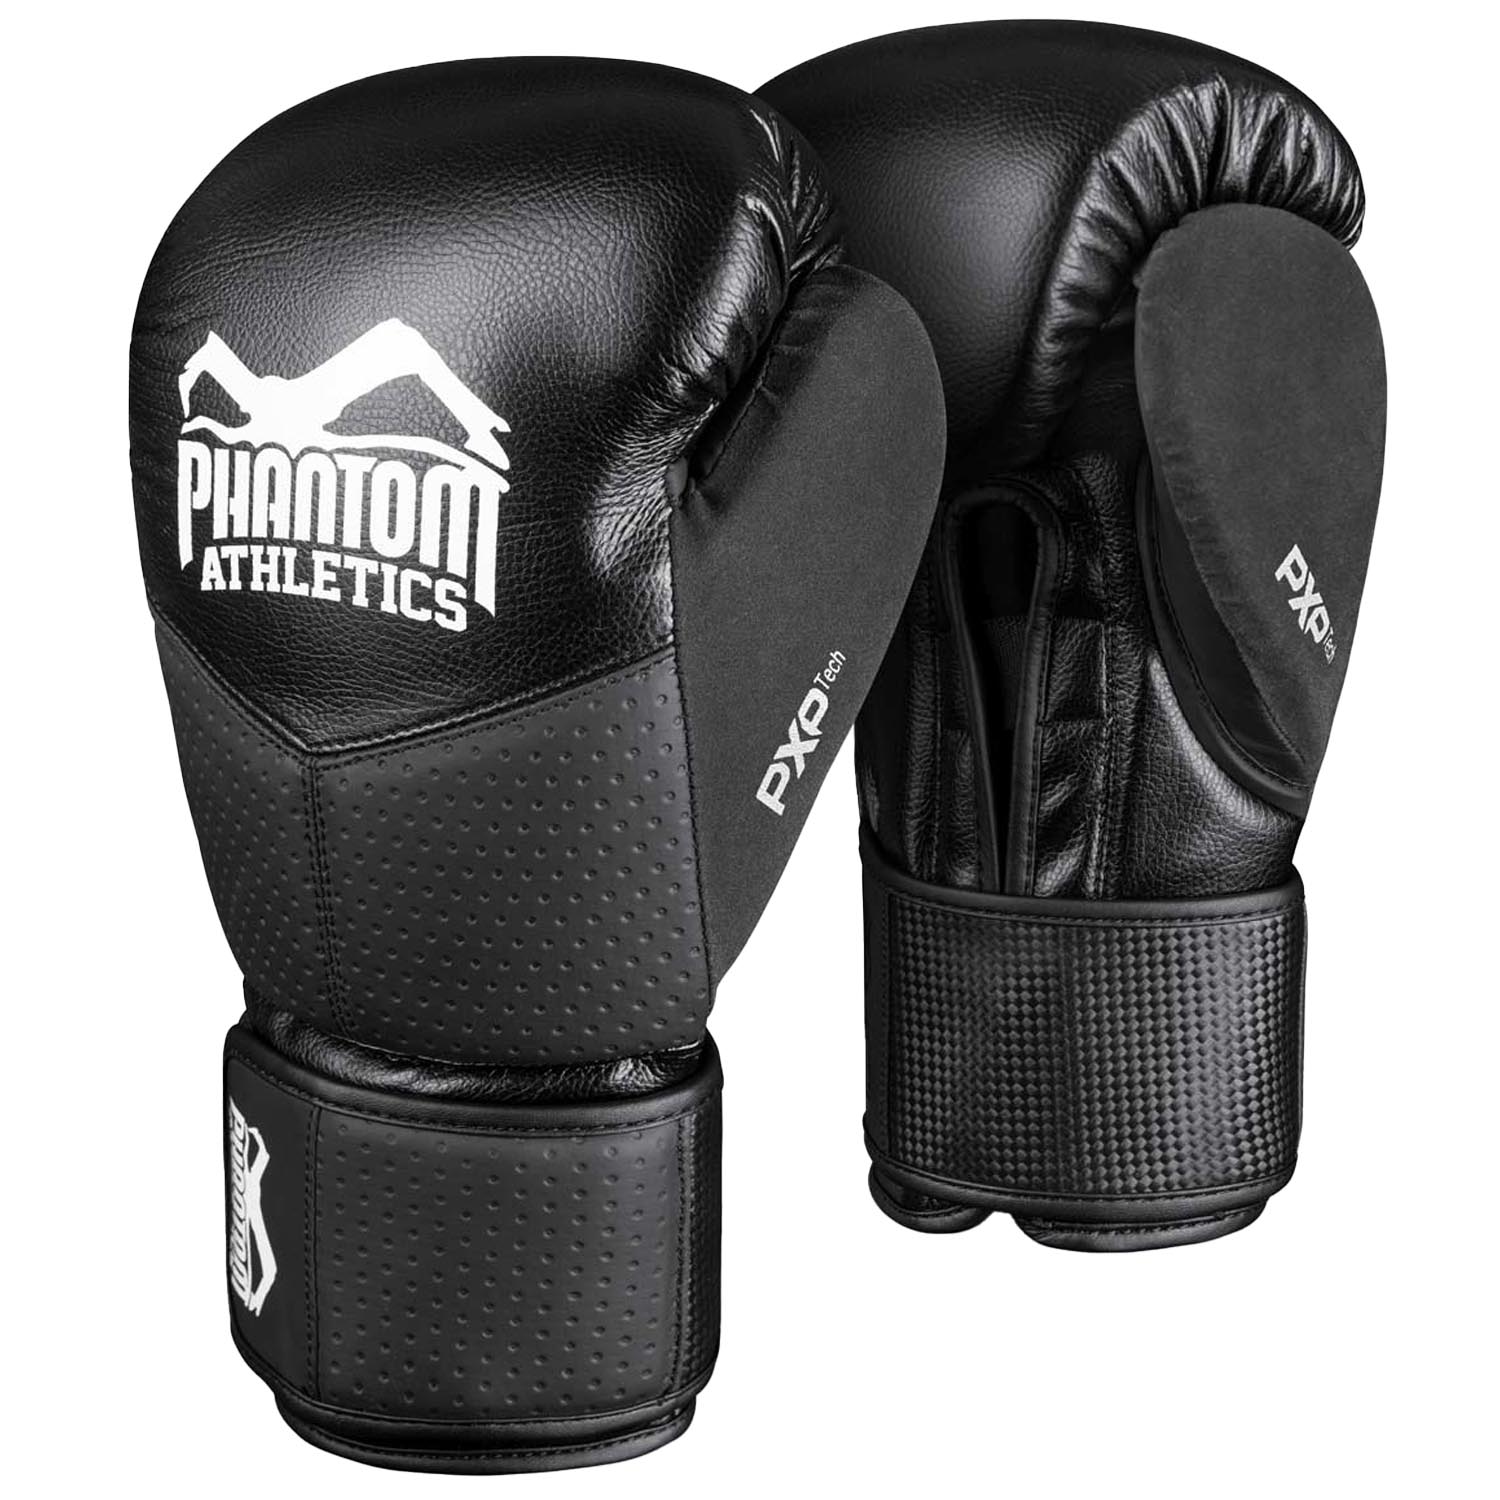 Phantom Athletics Boxing Gloves, Riot Pro, black, 16 Oz